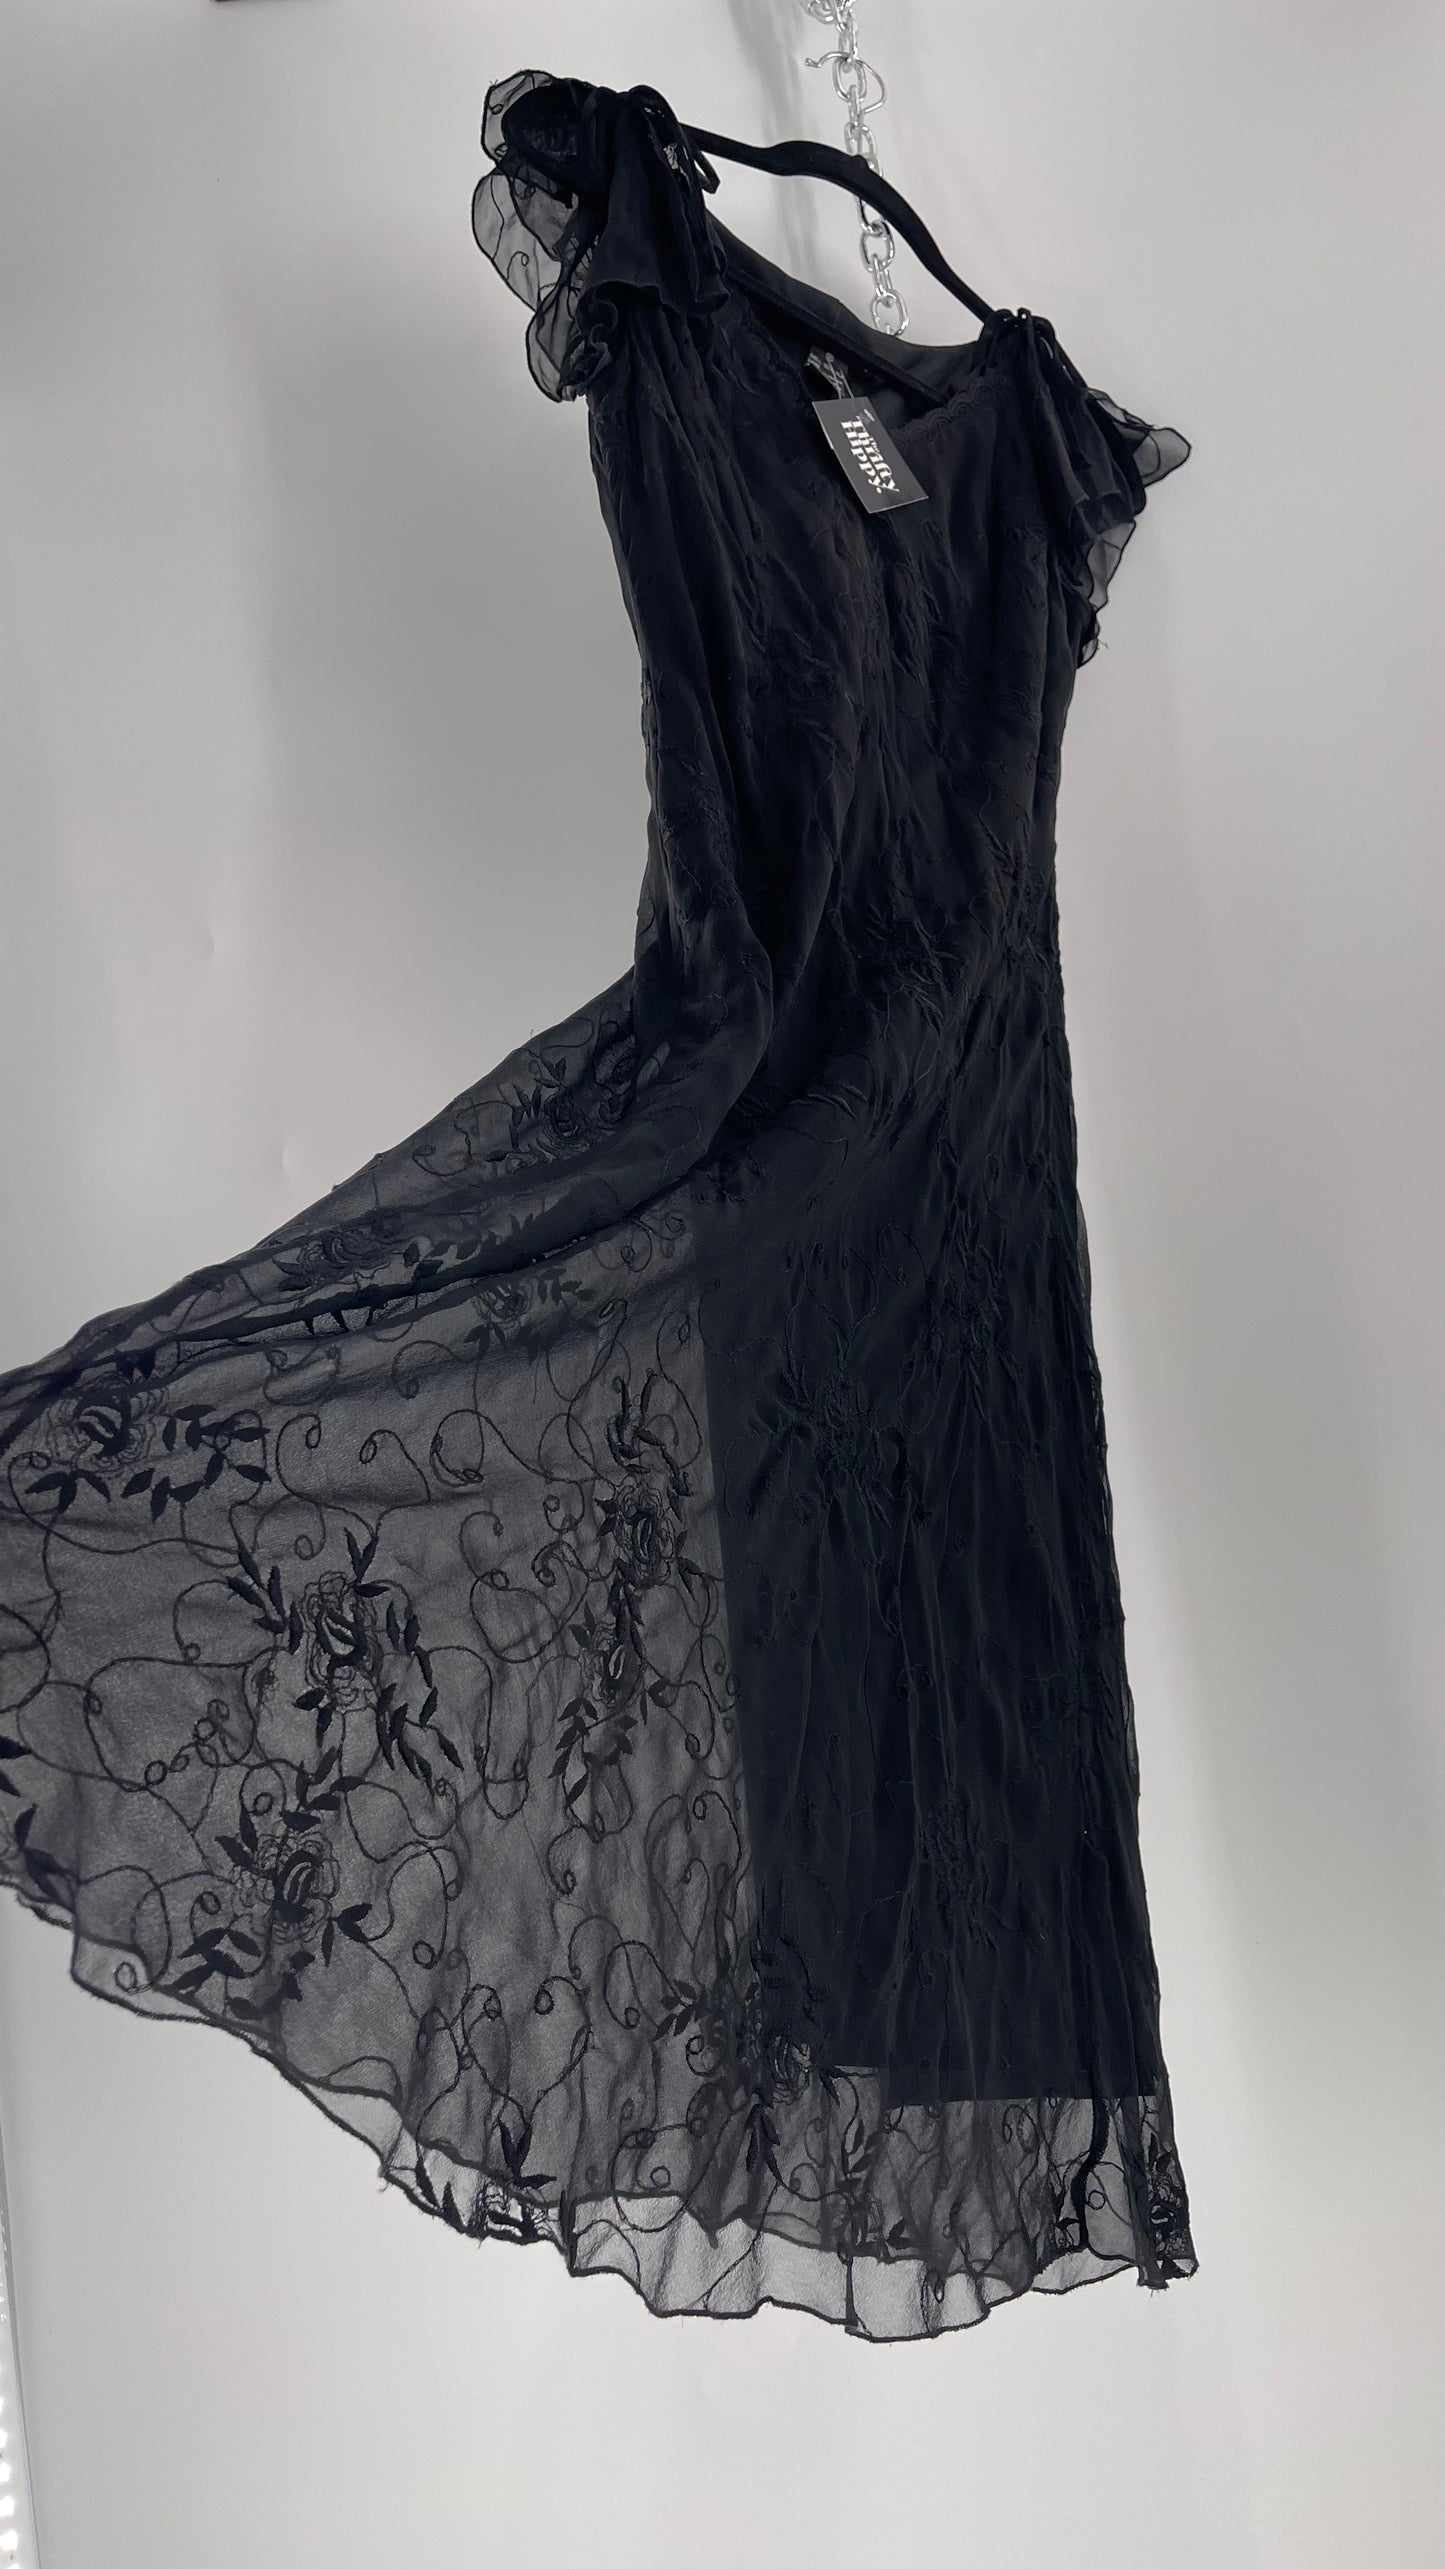 Vintage Jonathan Martin 100% Silk Black Embroidered MIDI Dress with Tie Shoulder Detail (10)